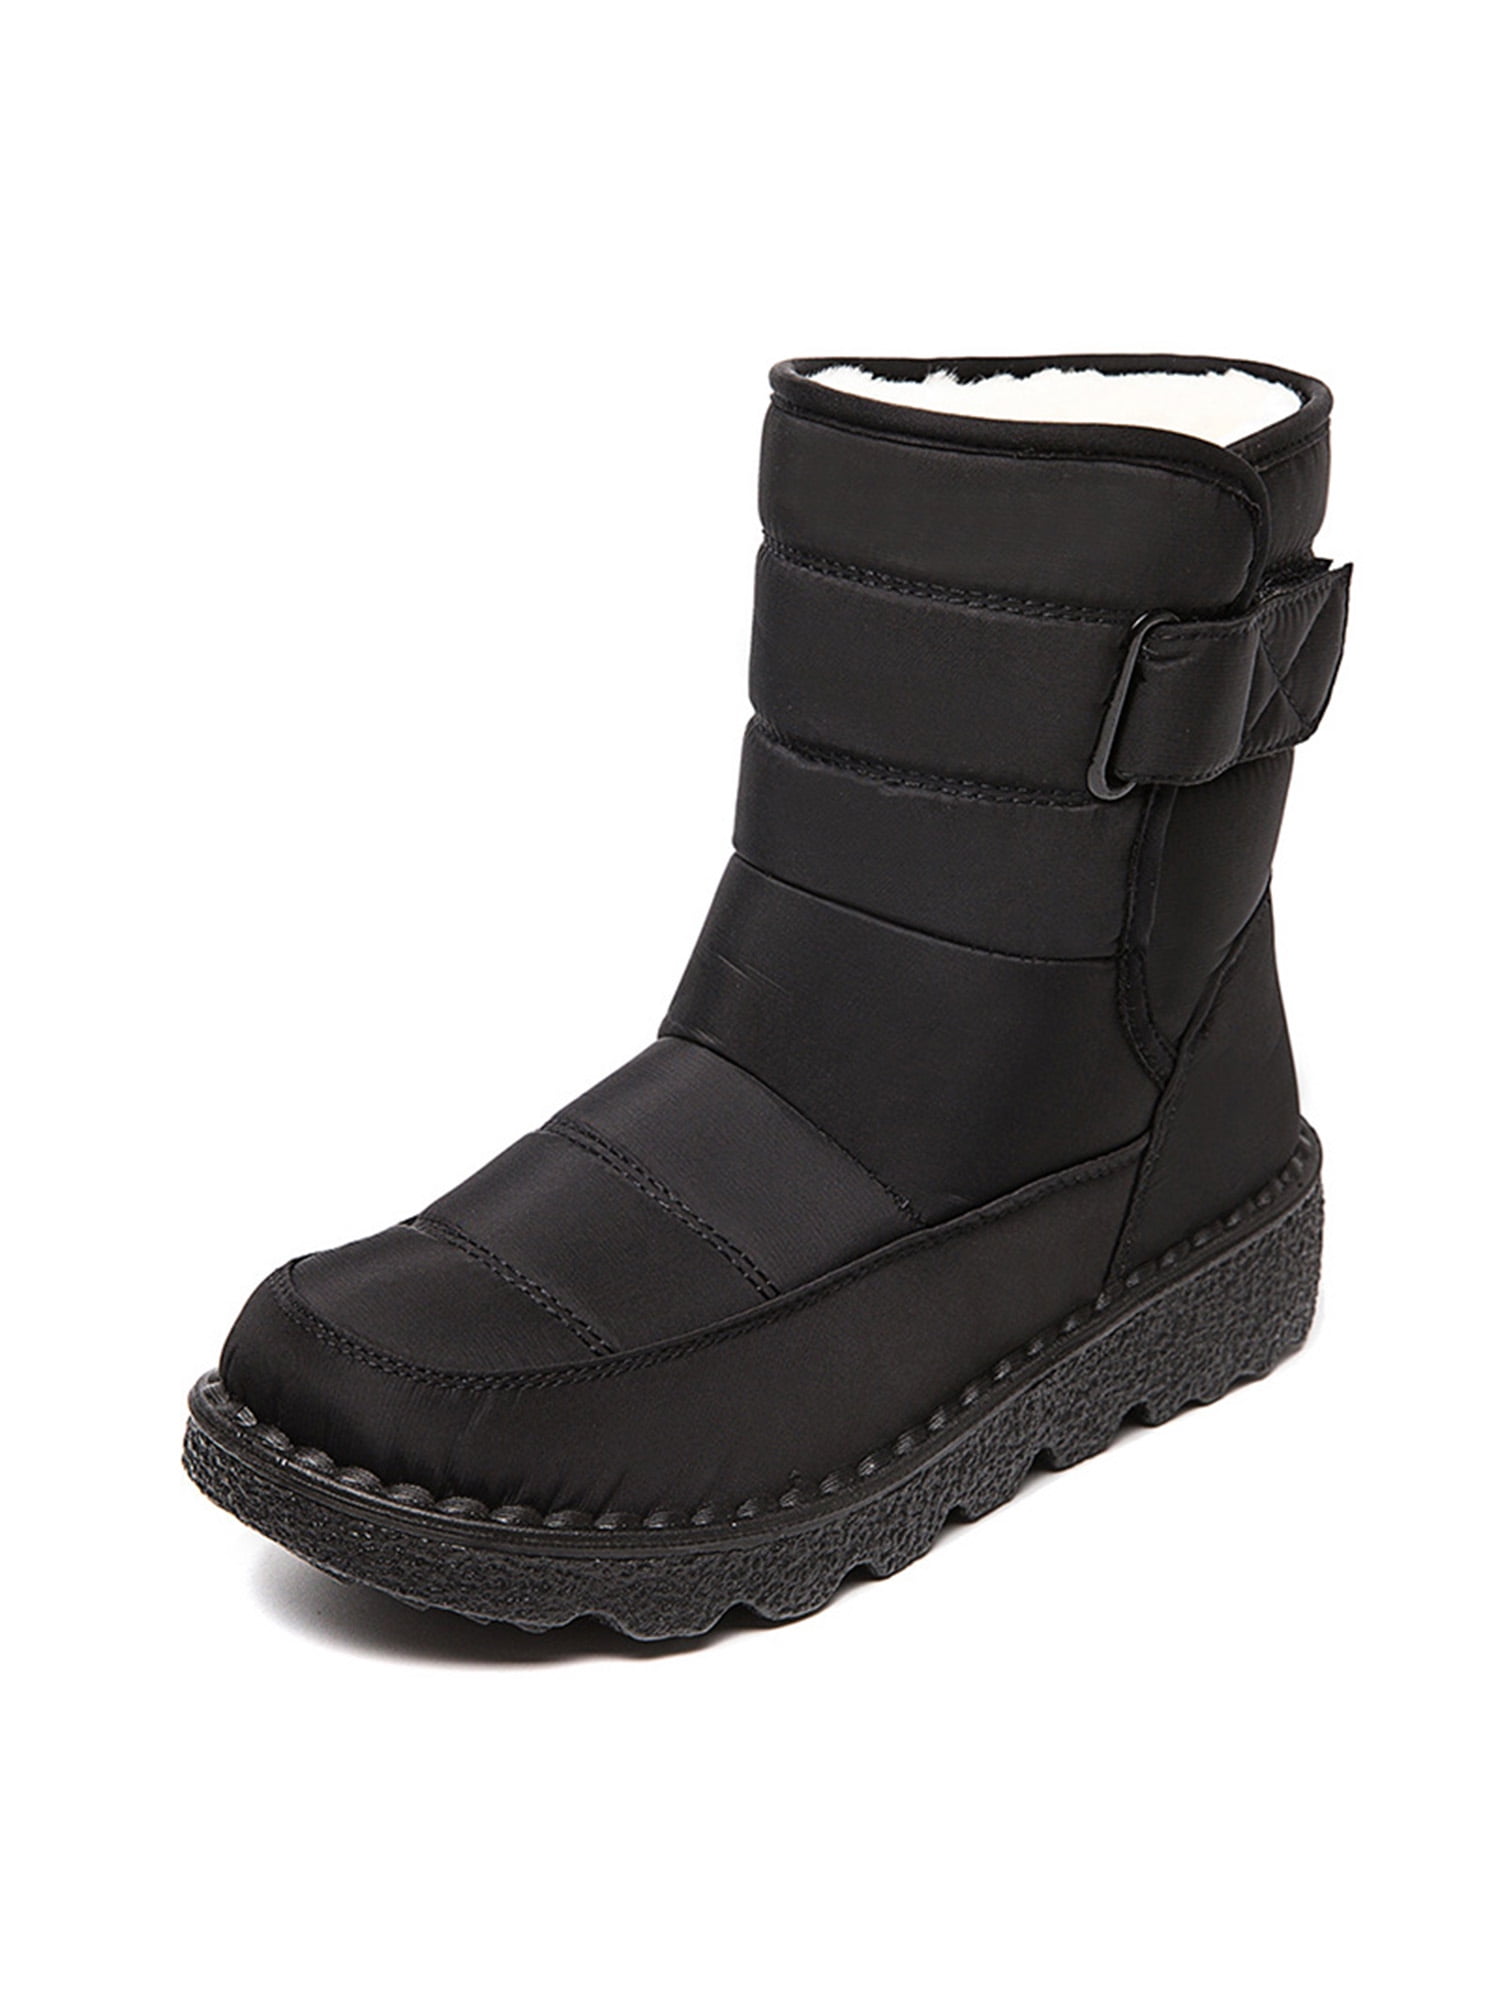 YIRUIYA Kids Snow Boots Anti-Slip Winter Warm Sneakers for Girls Boys